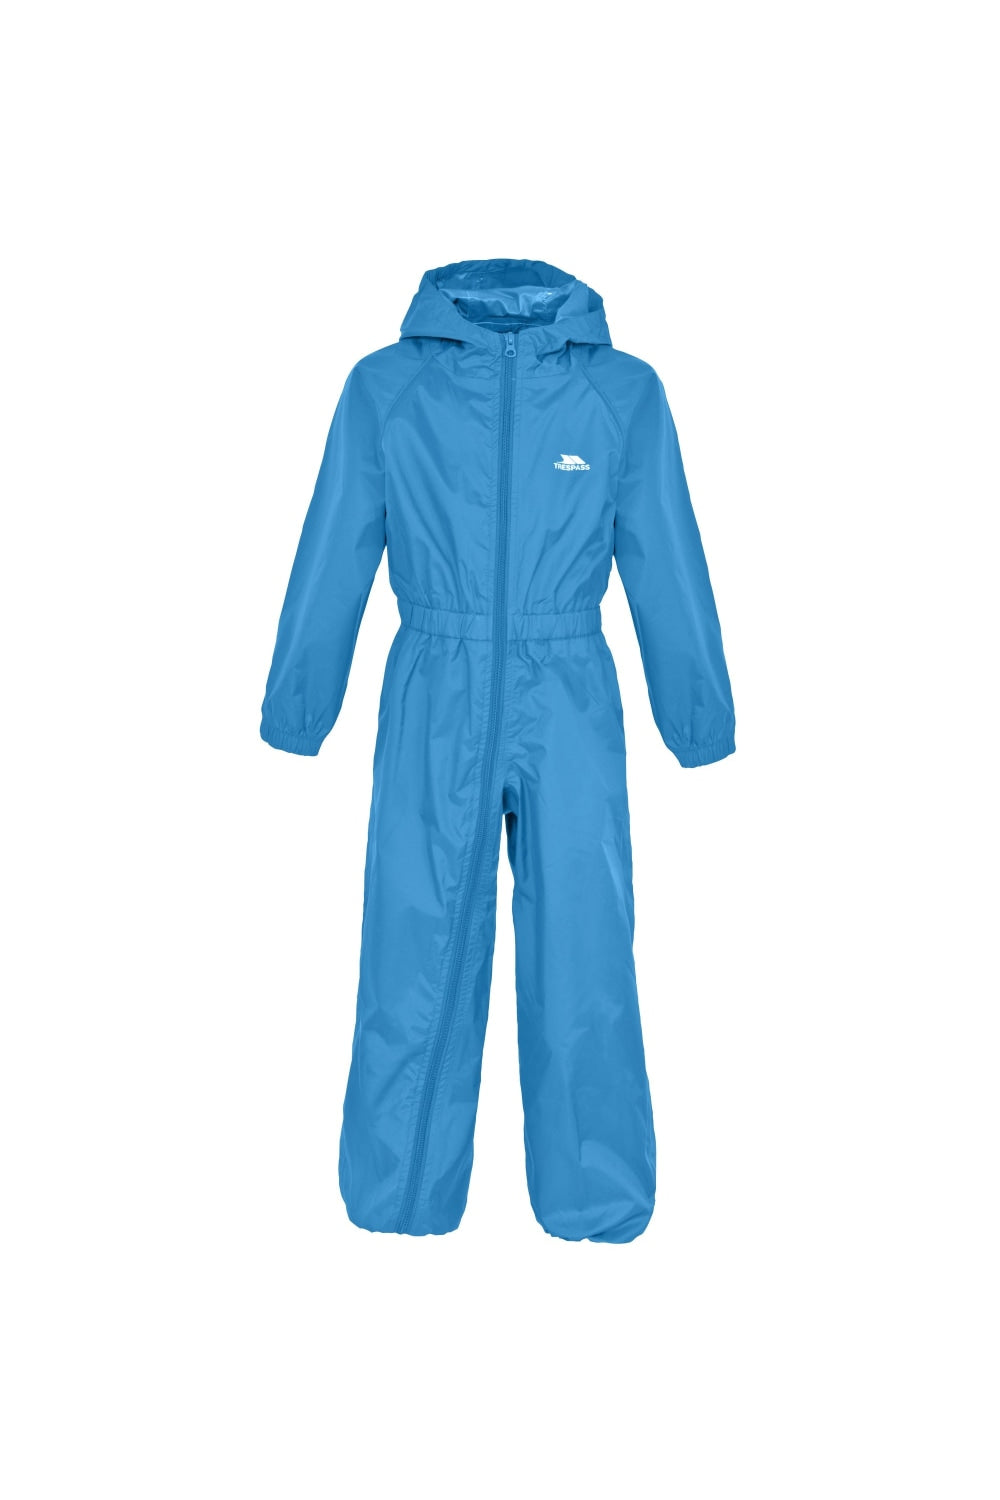 Trespass Childrens/Kids Button Waterproof Rain Suit